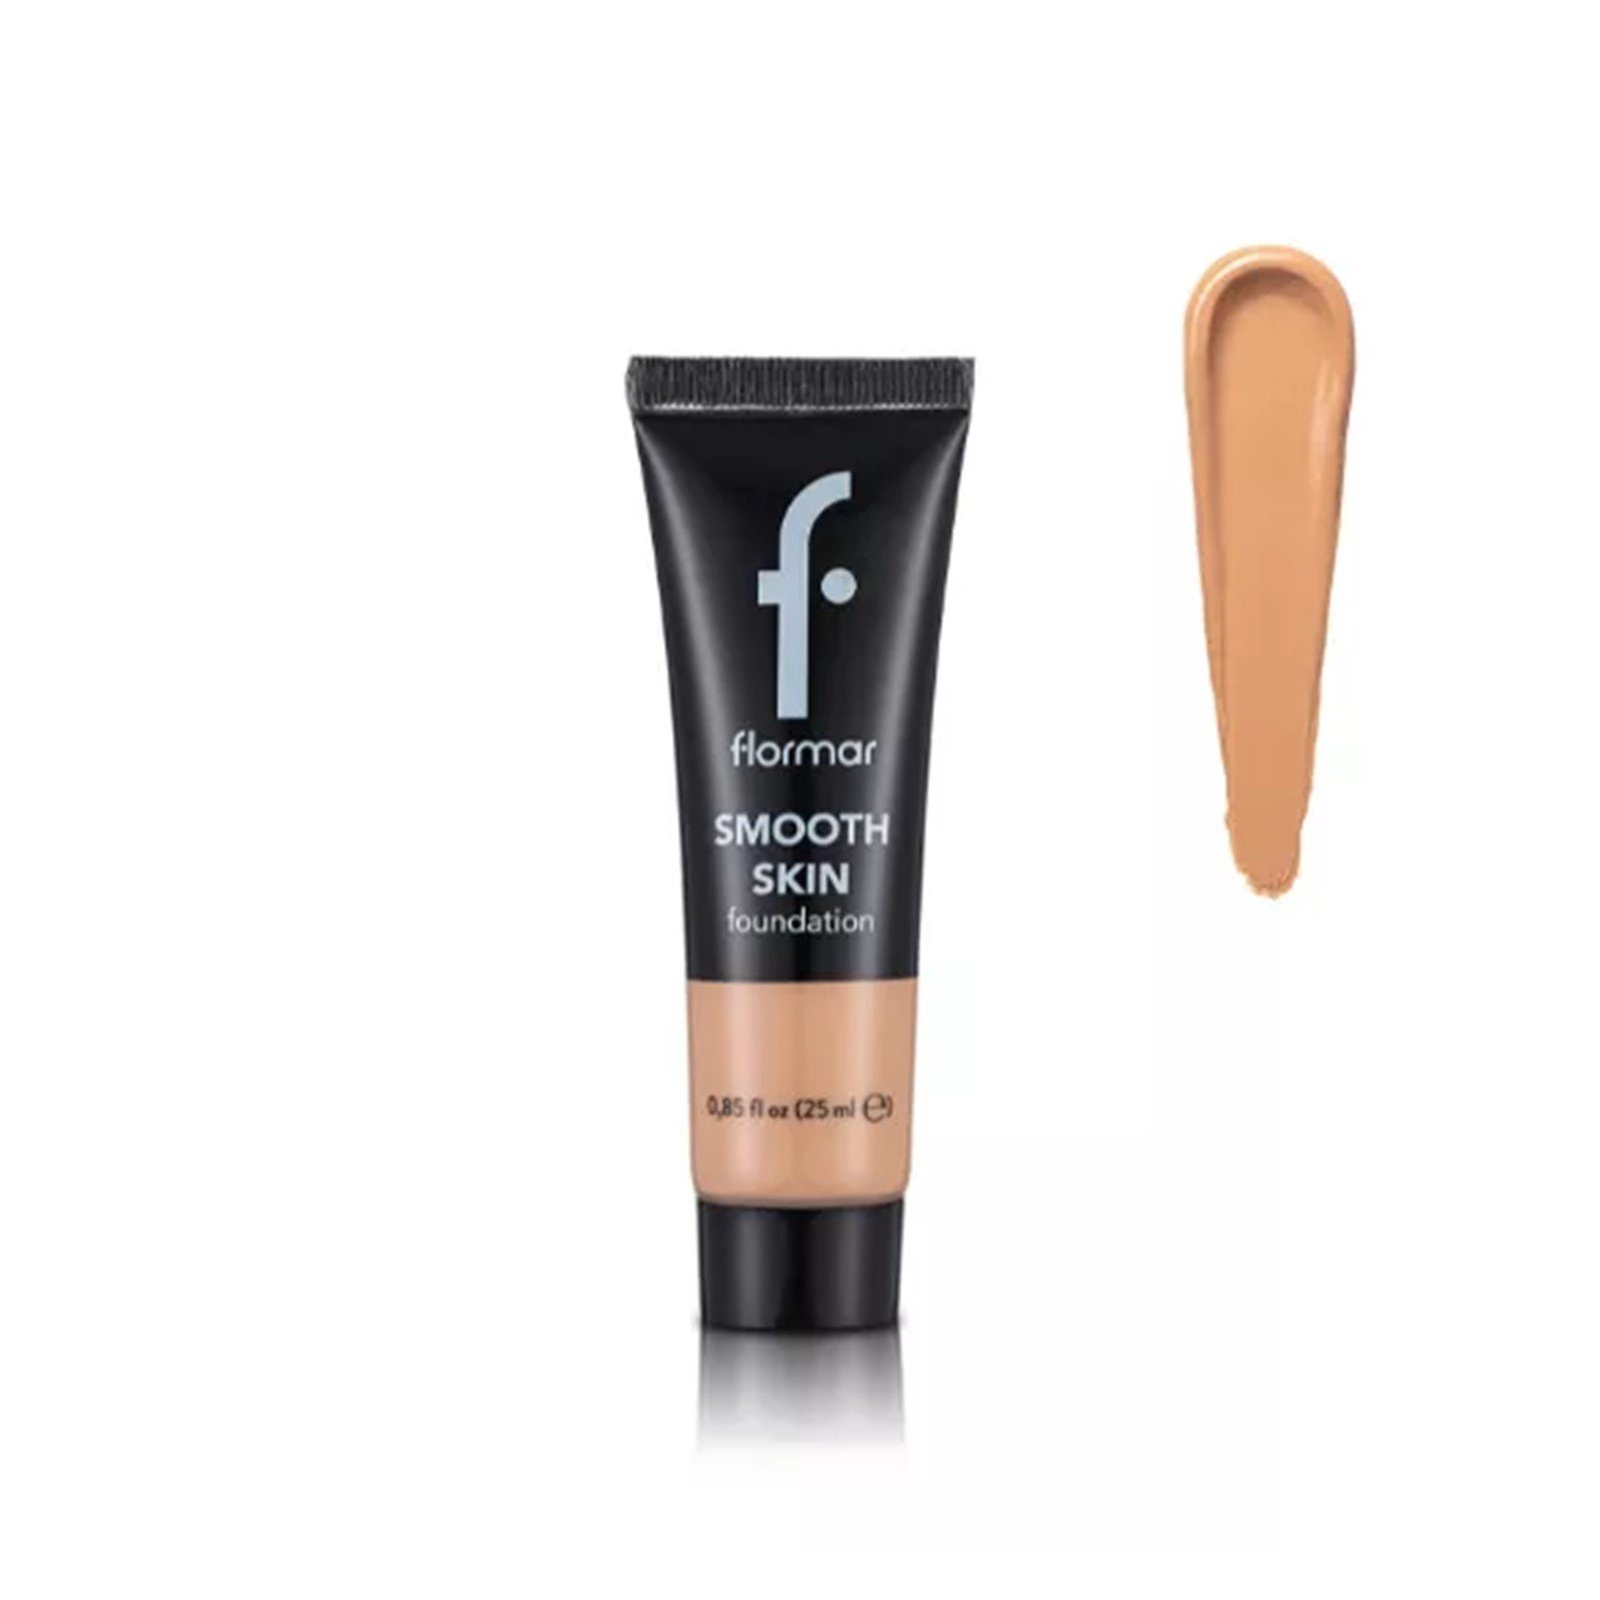 Flormar Smooth Skin Foundation 002 Pastelle 25ml (0.85 fl oz)